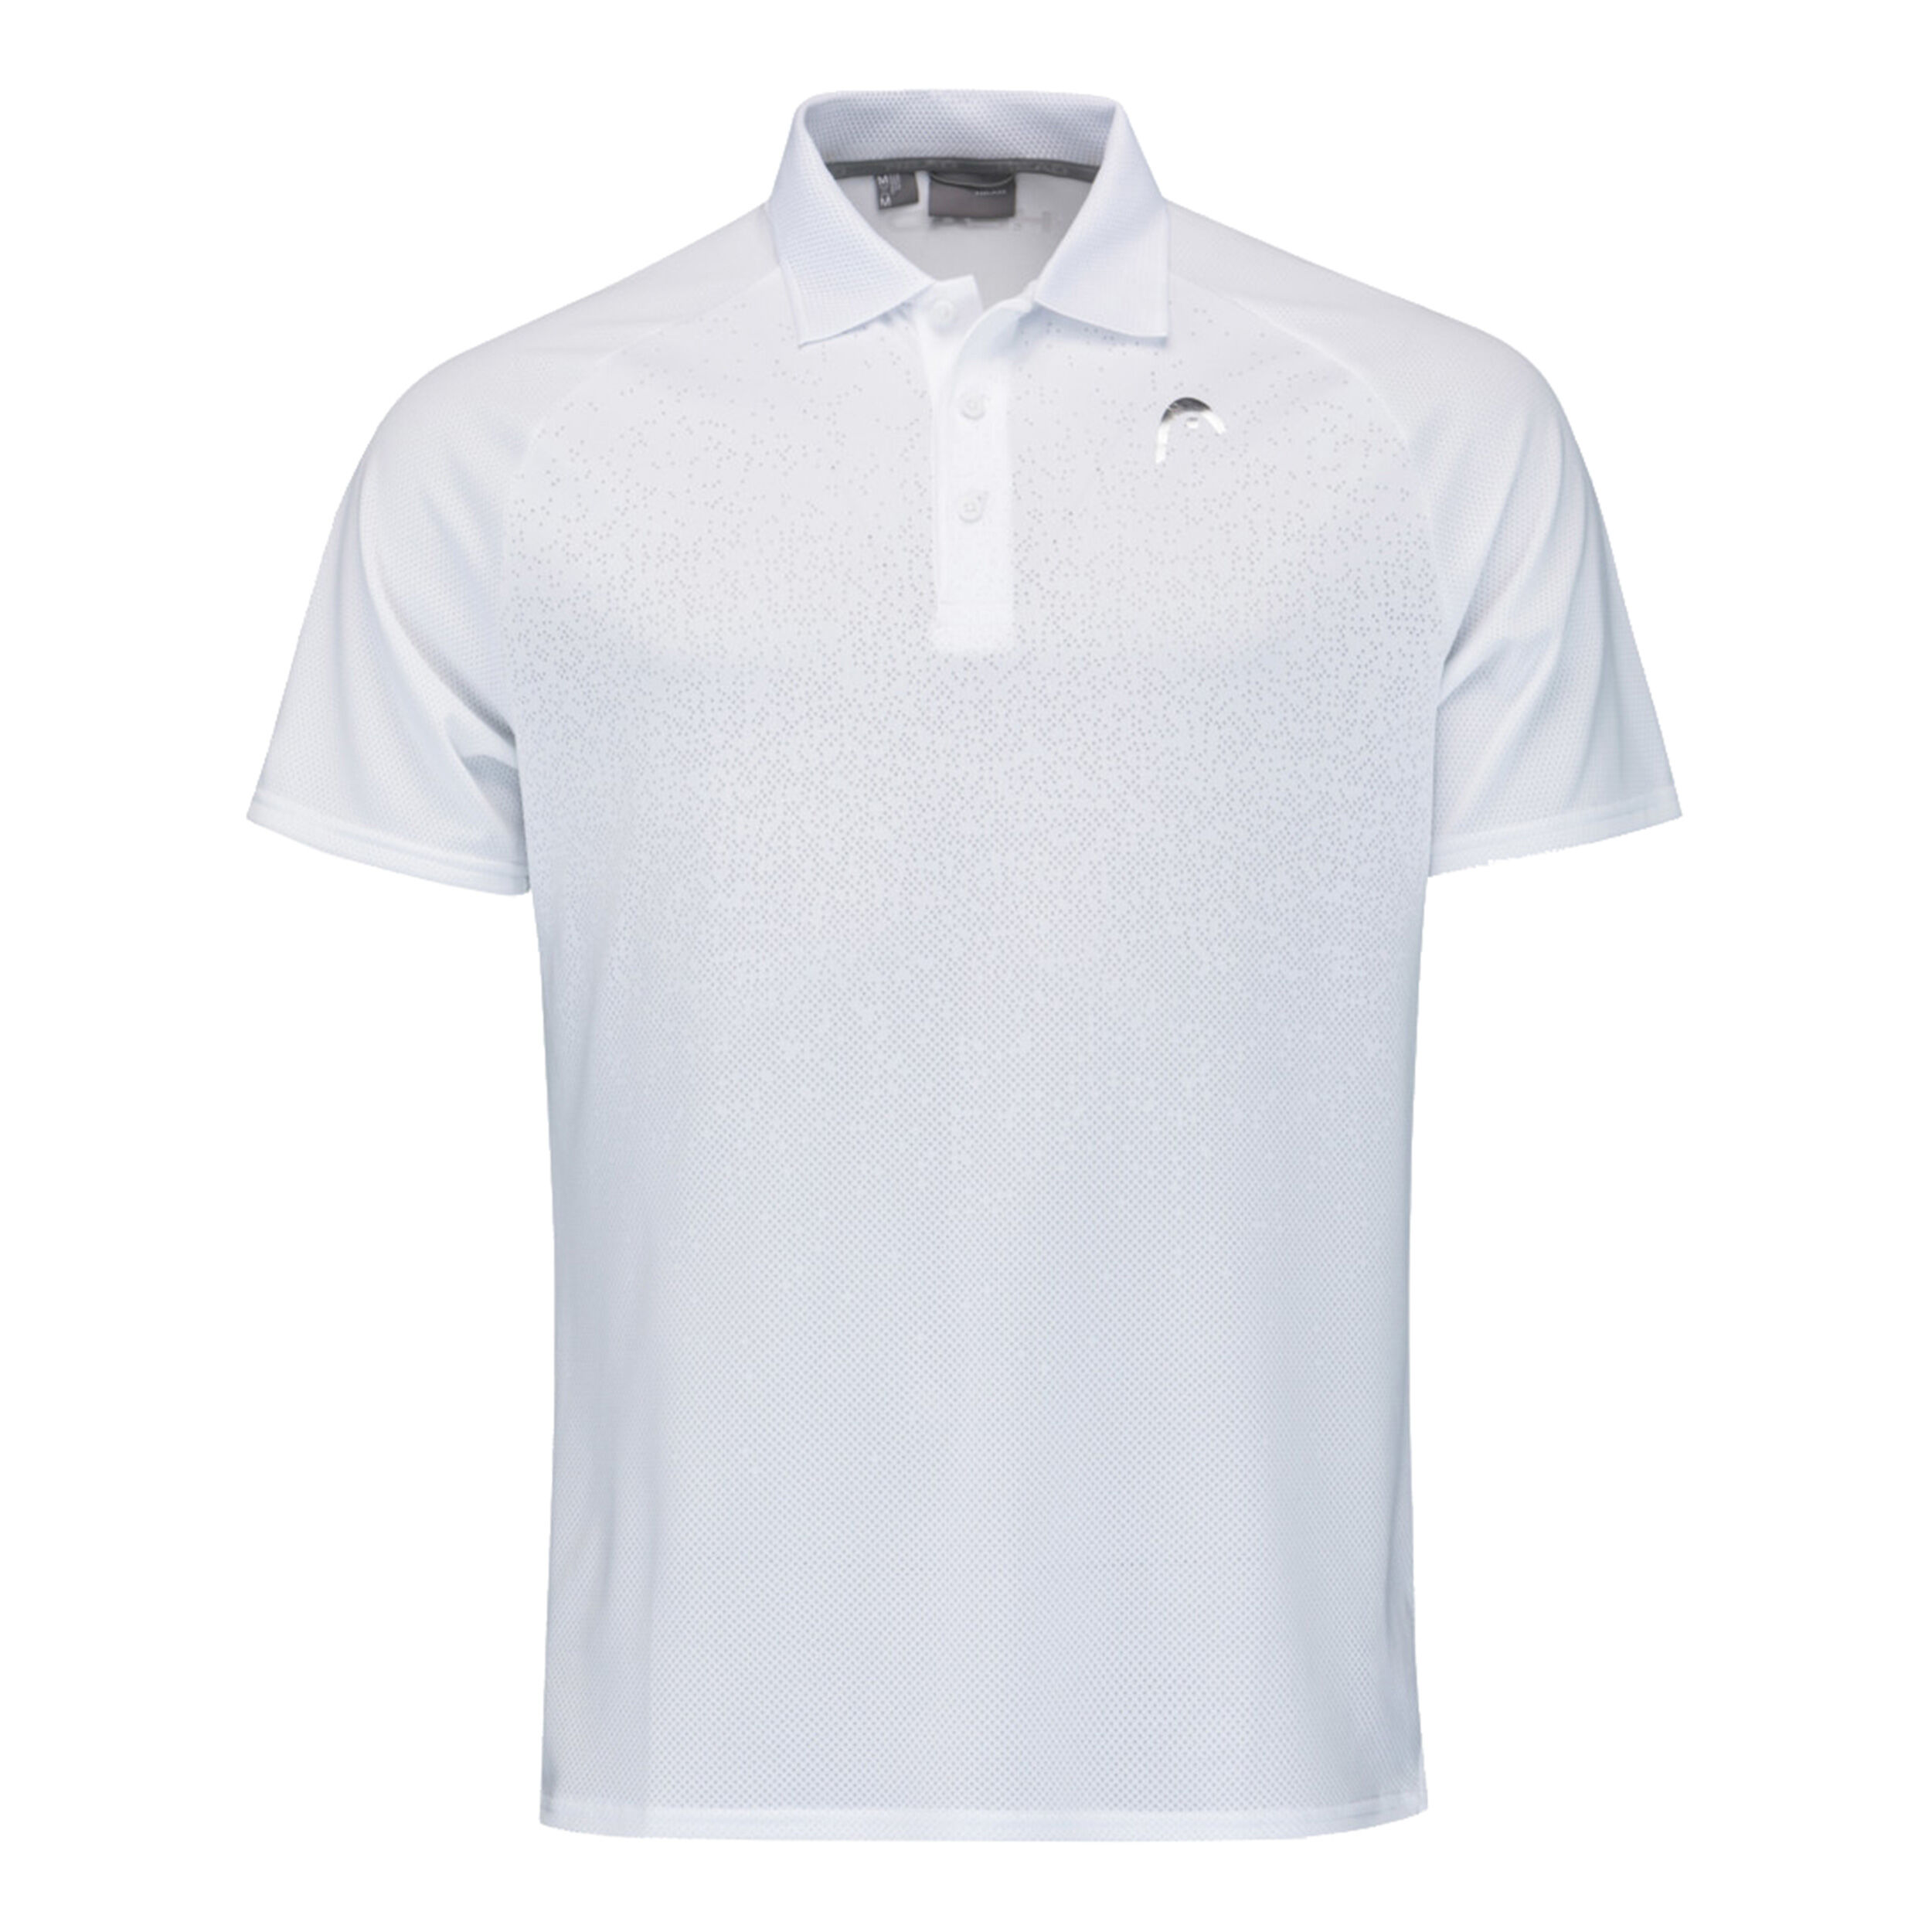 Unisex Oberbekleidung Performance Polo Shirt Babolat Performance Polo Shirt Large Size